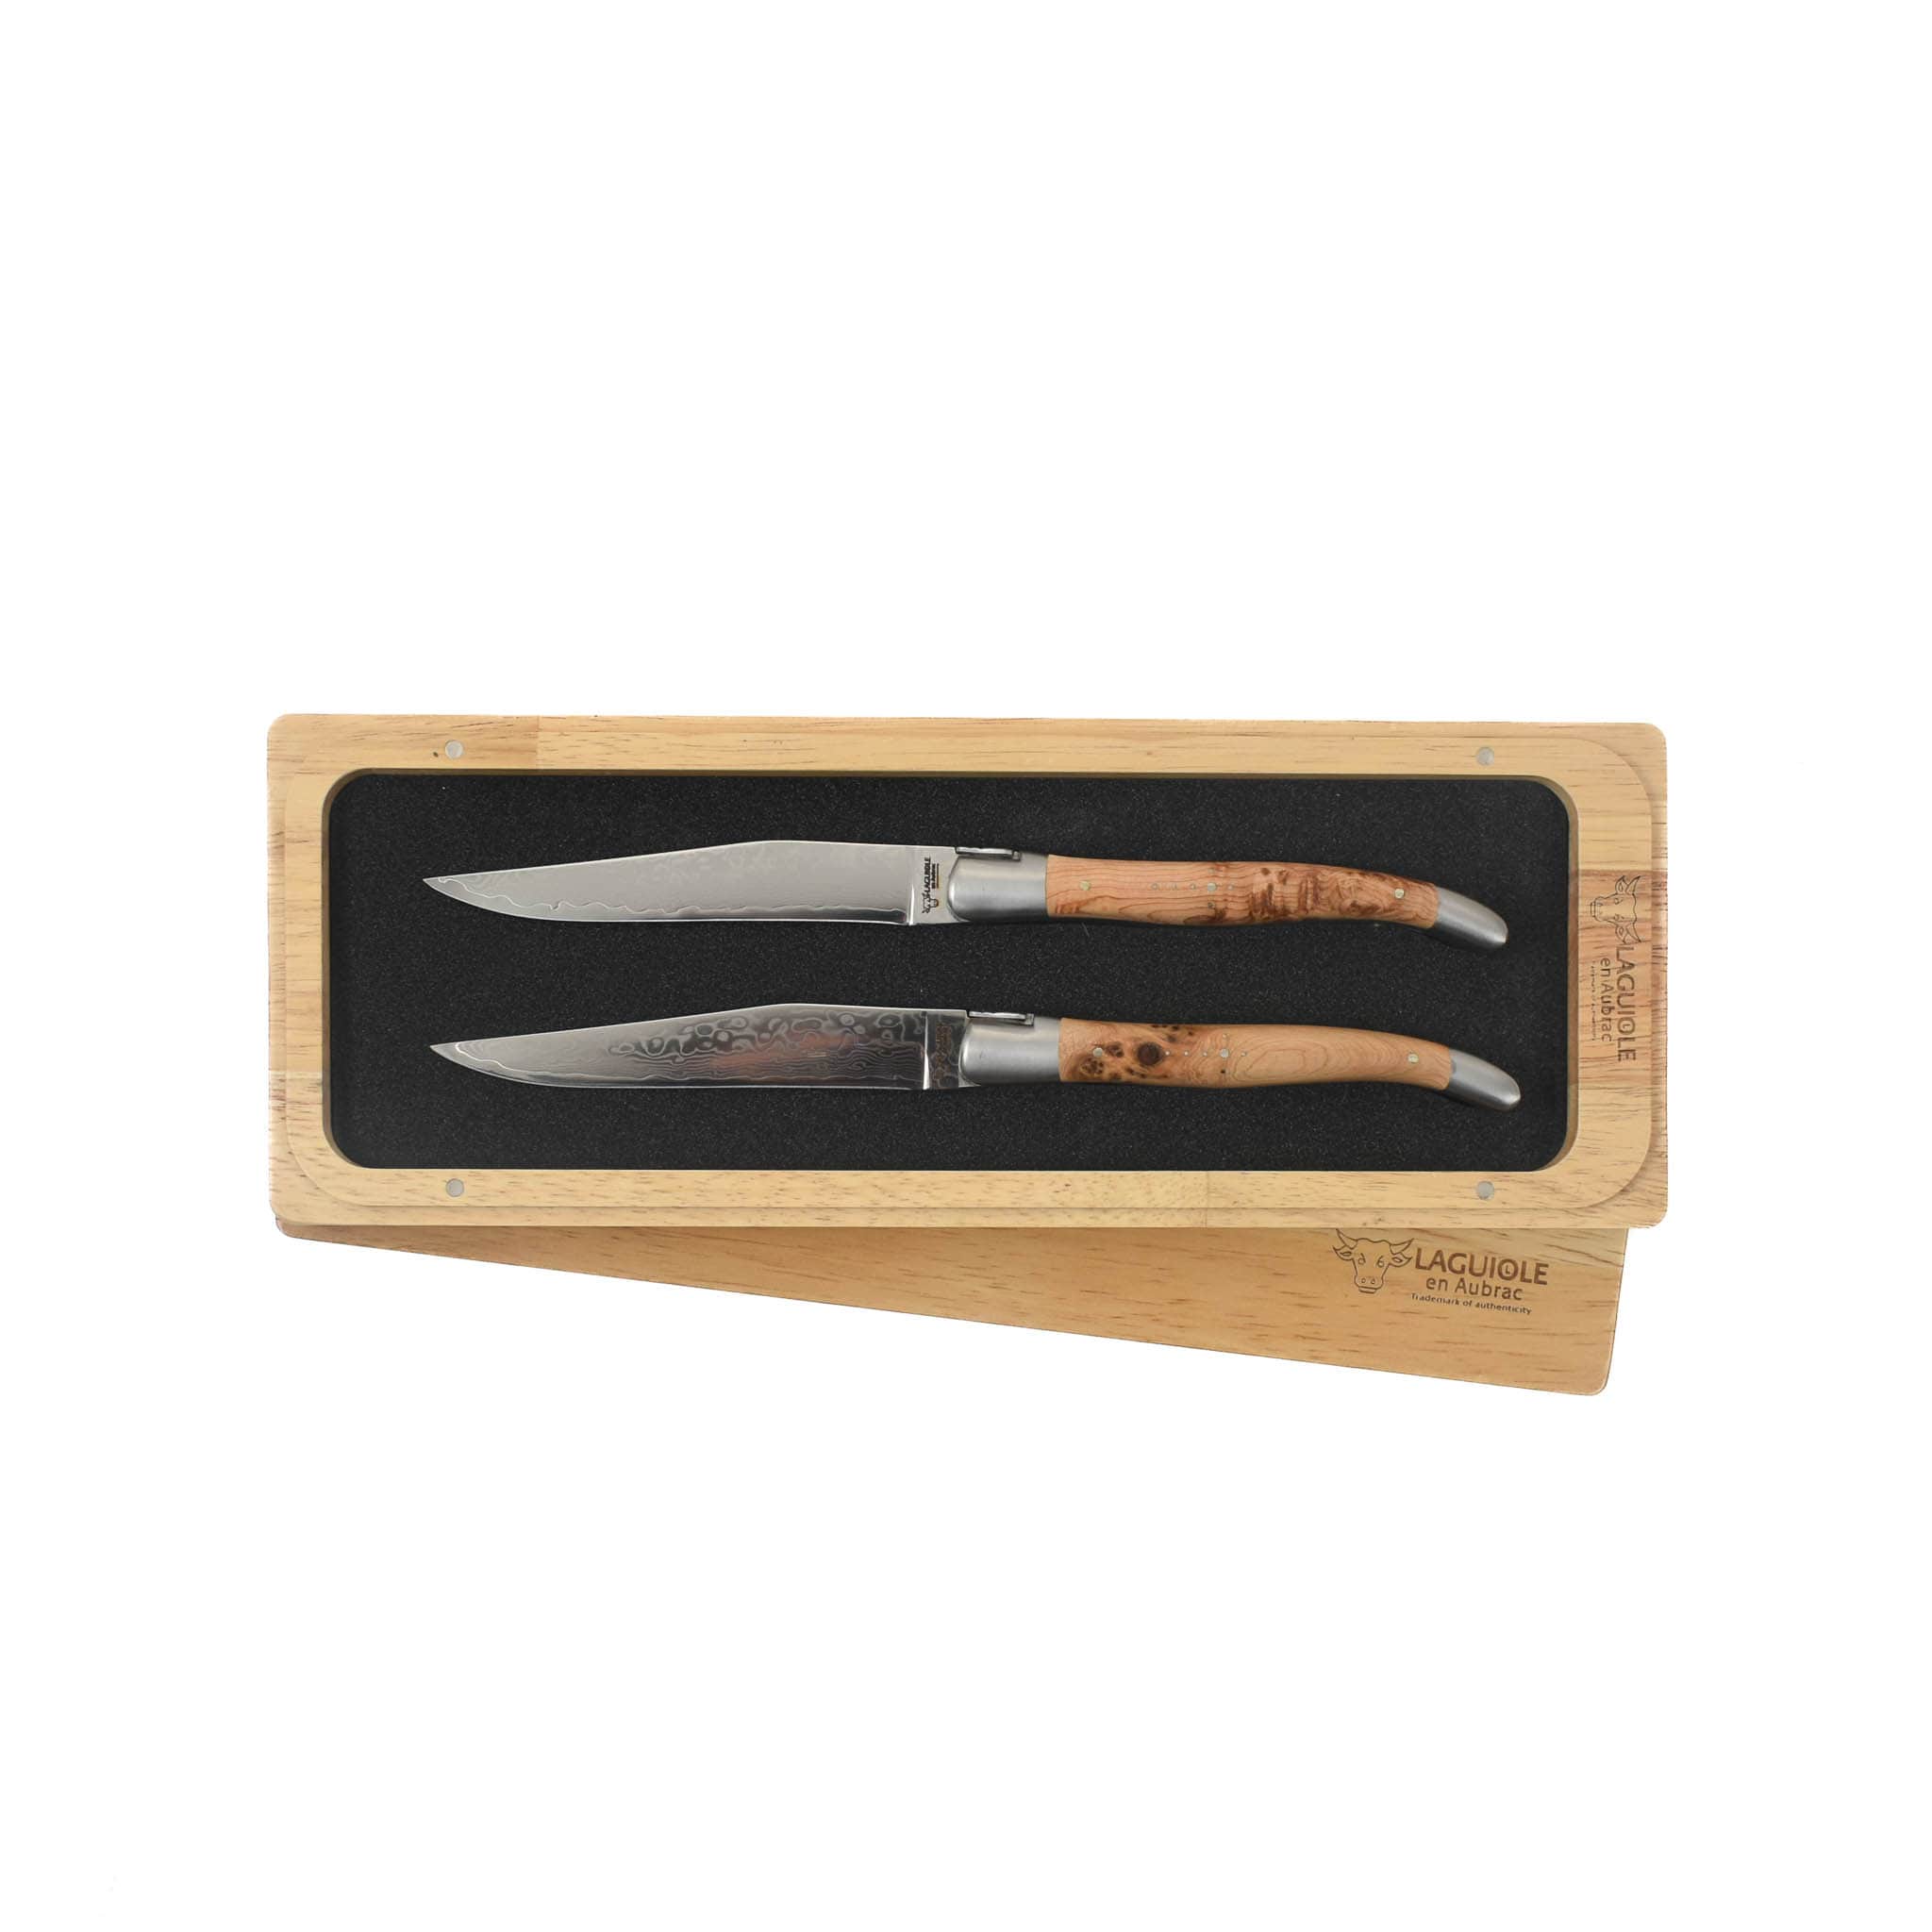 Laguiole en Aubrac Set of 2 Damascus Steel Steak Knives, Juniper